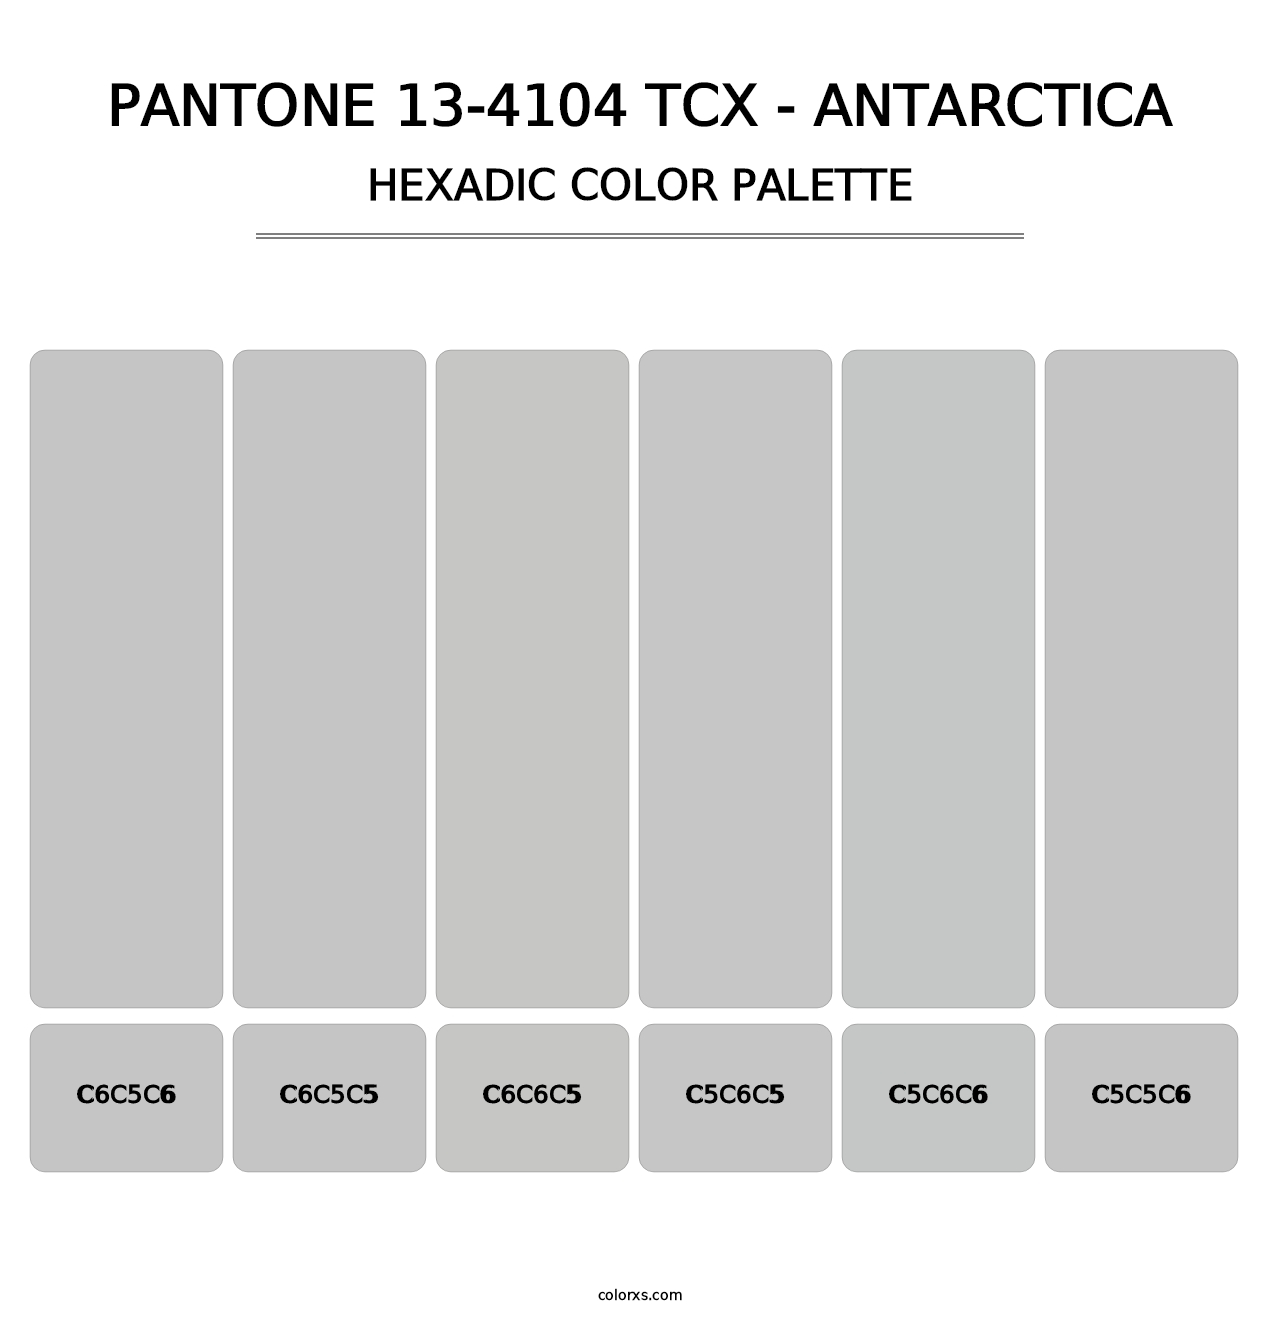 PANTONE 13-4104 TCX - Antarctica - Hexadic Color Palette